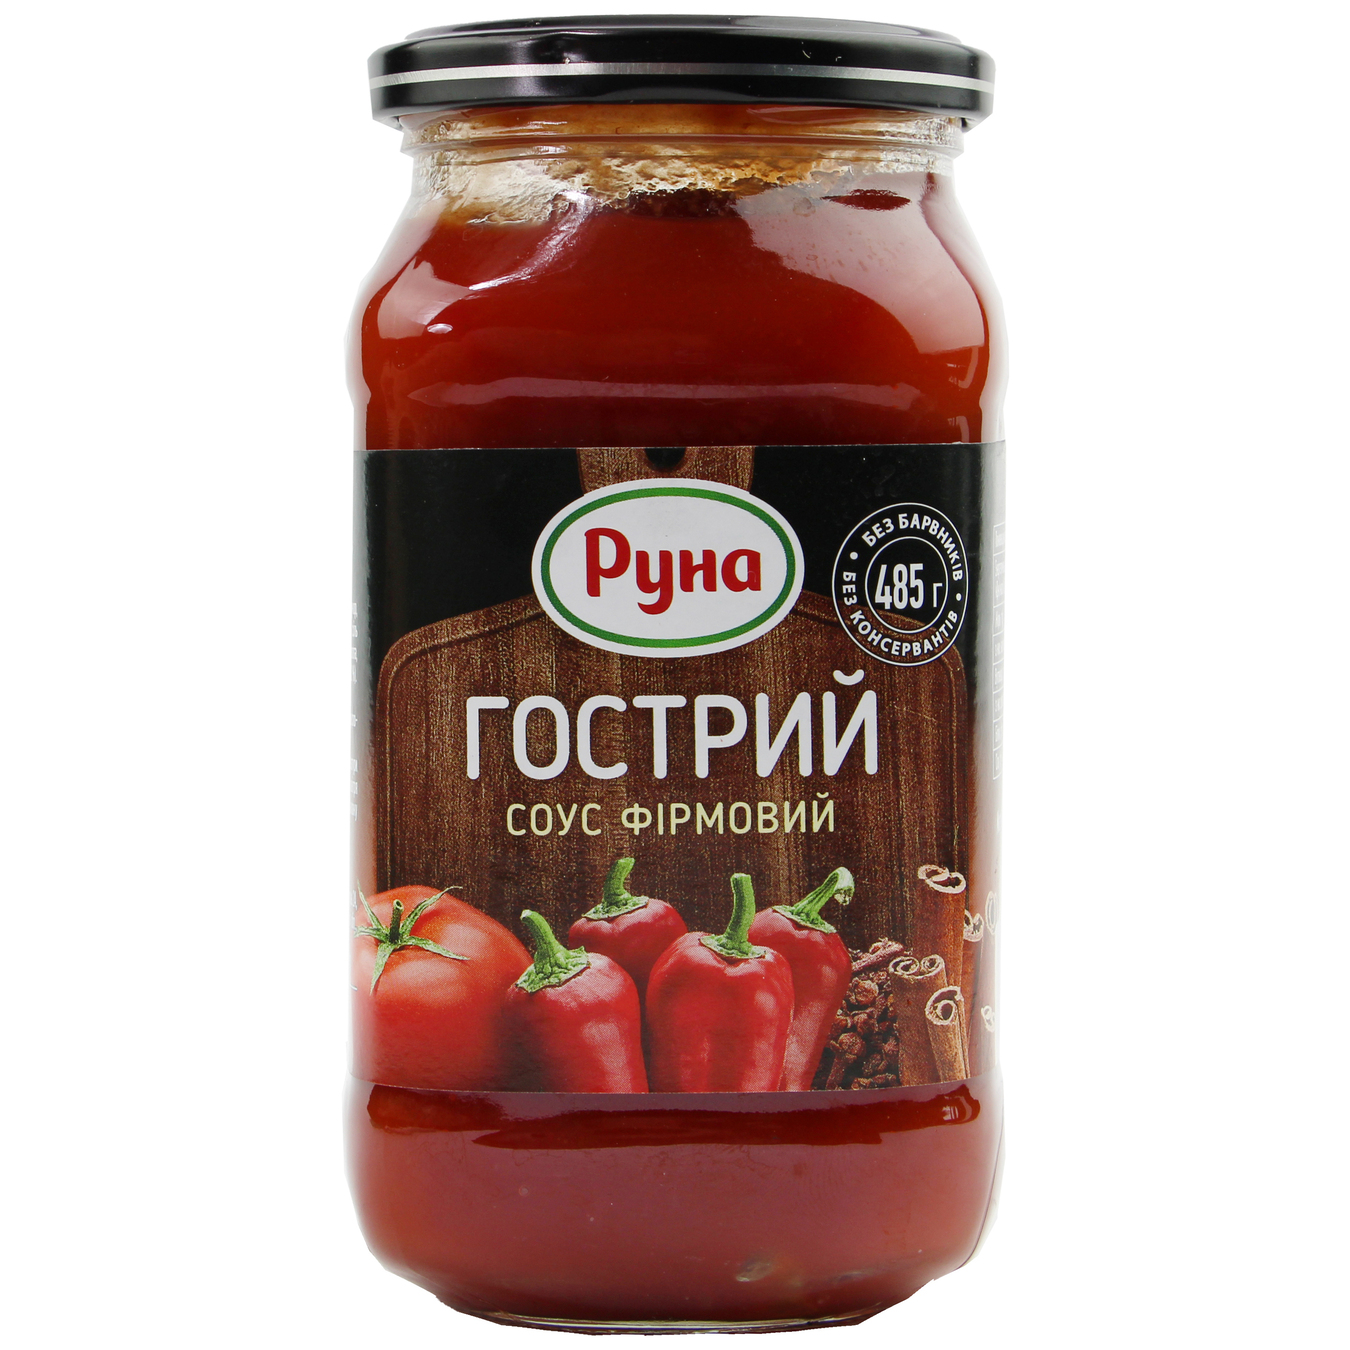 Runa Piquant Tomato Sauce 485g